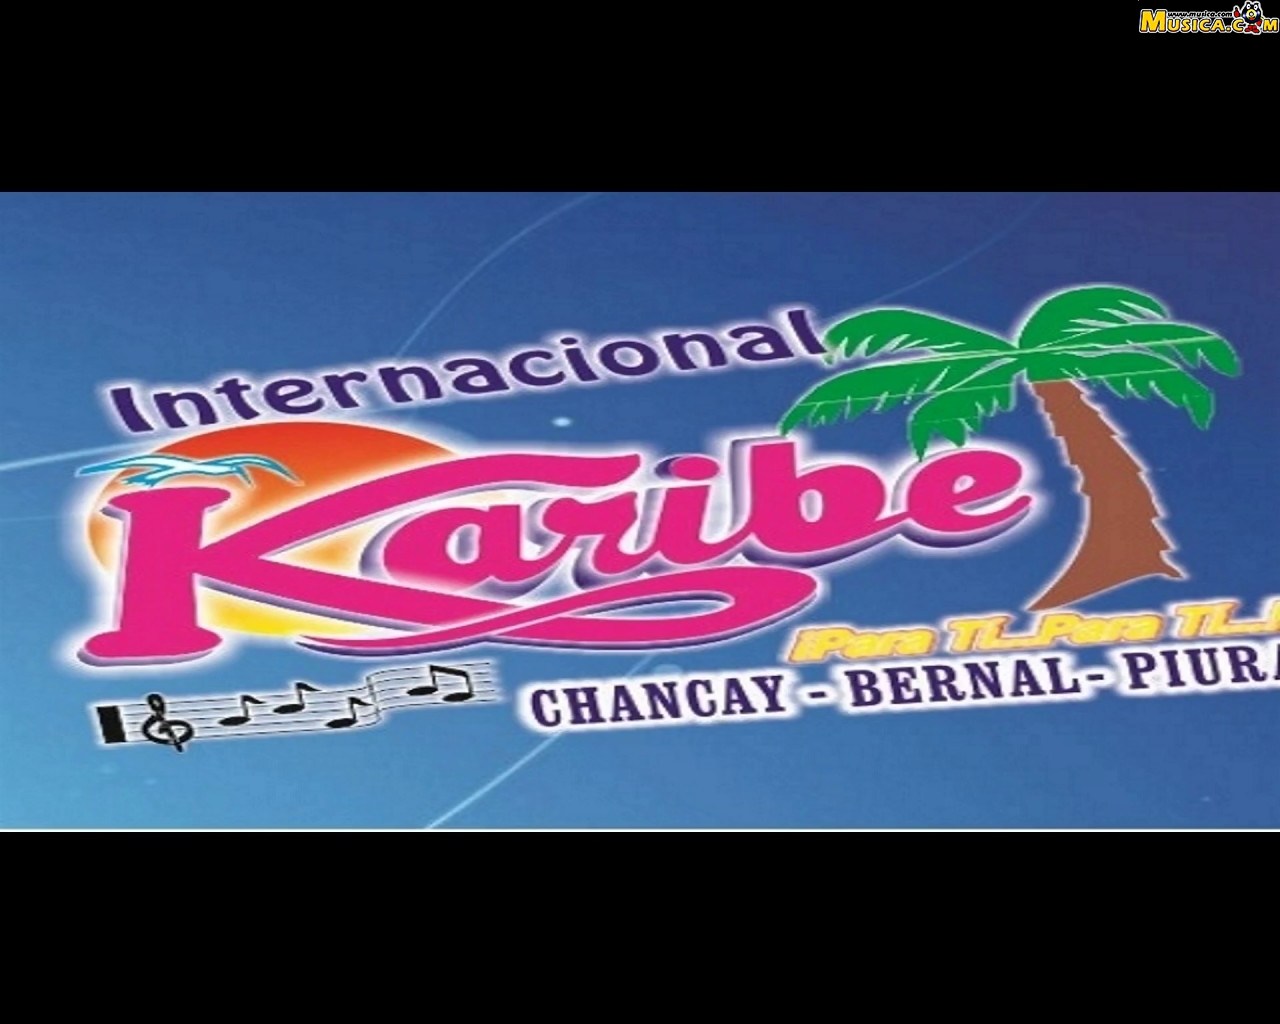 Fondo de pantalla de Internacional Karibe